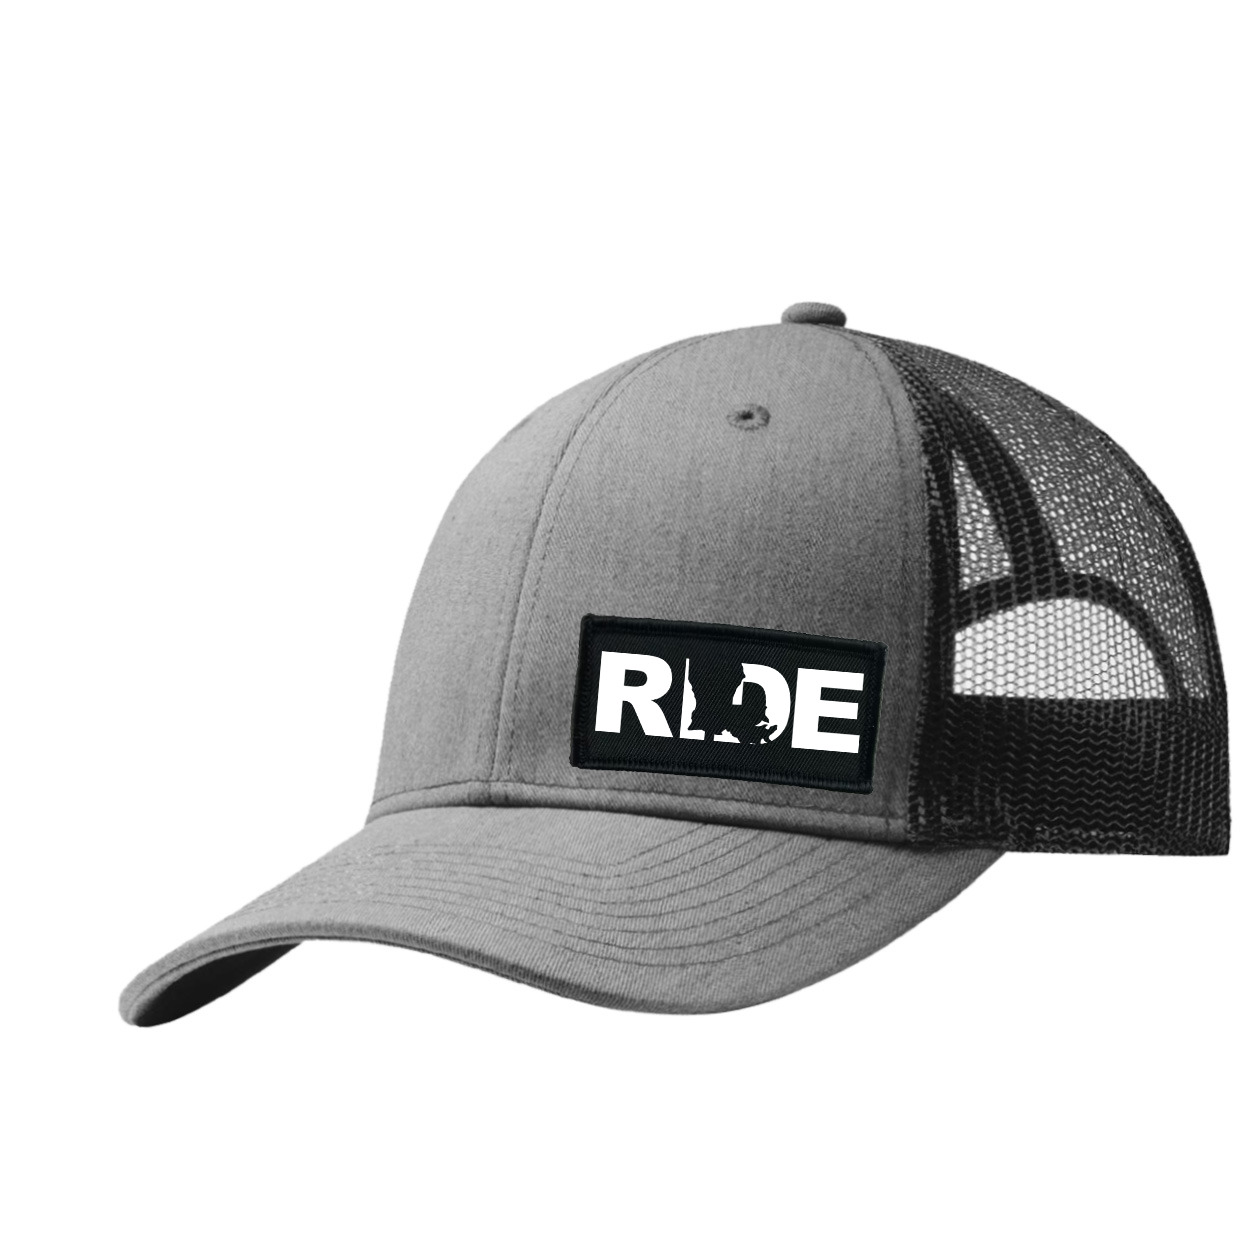 Ride Louisiana Night Out Woven Patch Snapback Trucker Hat Heather Gray/Black (White Logo)